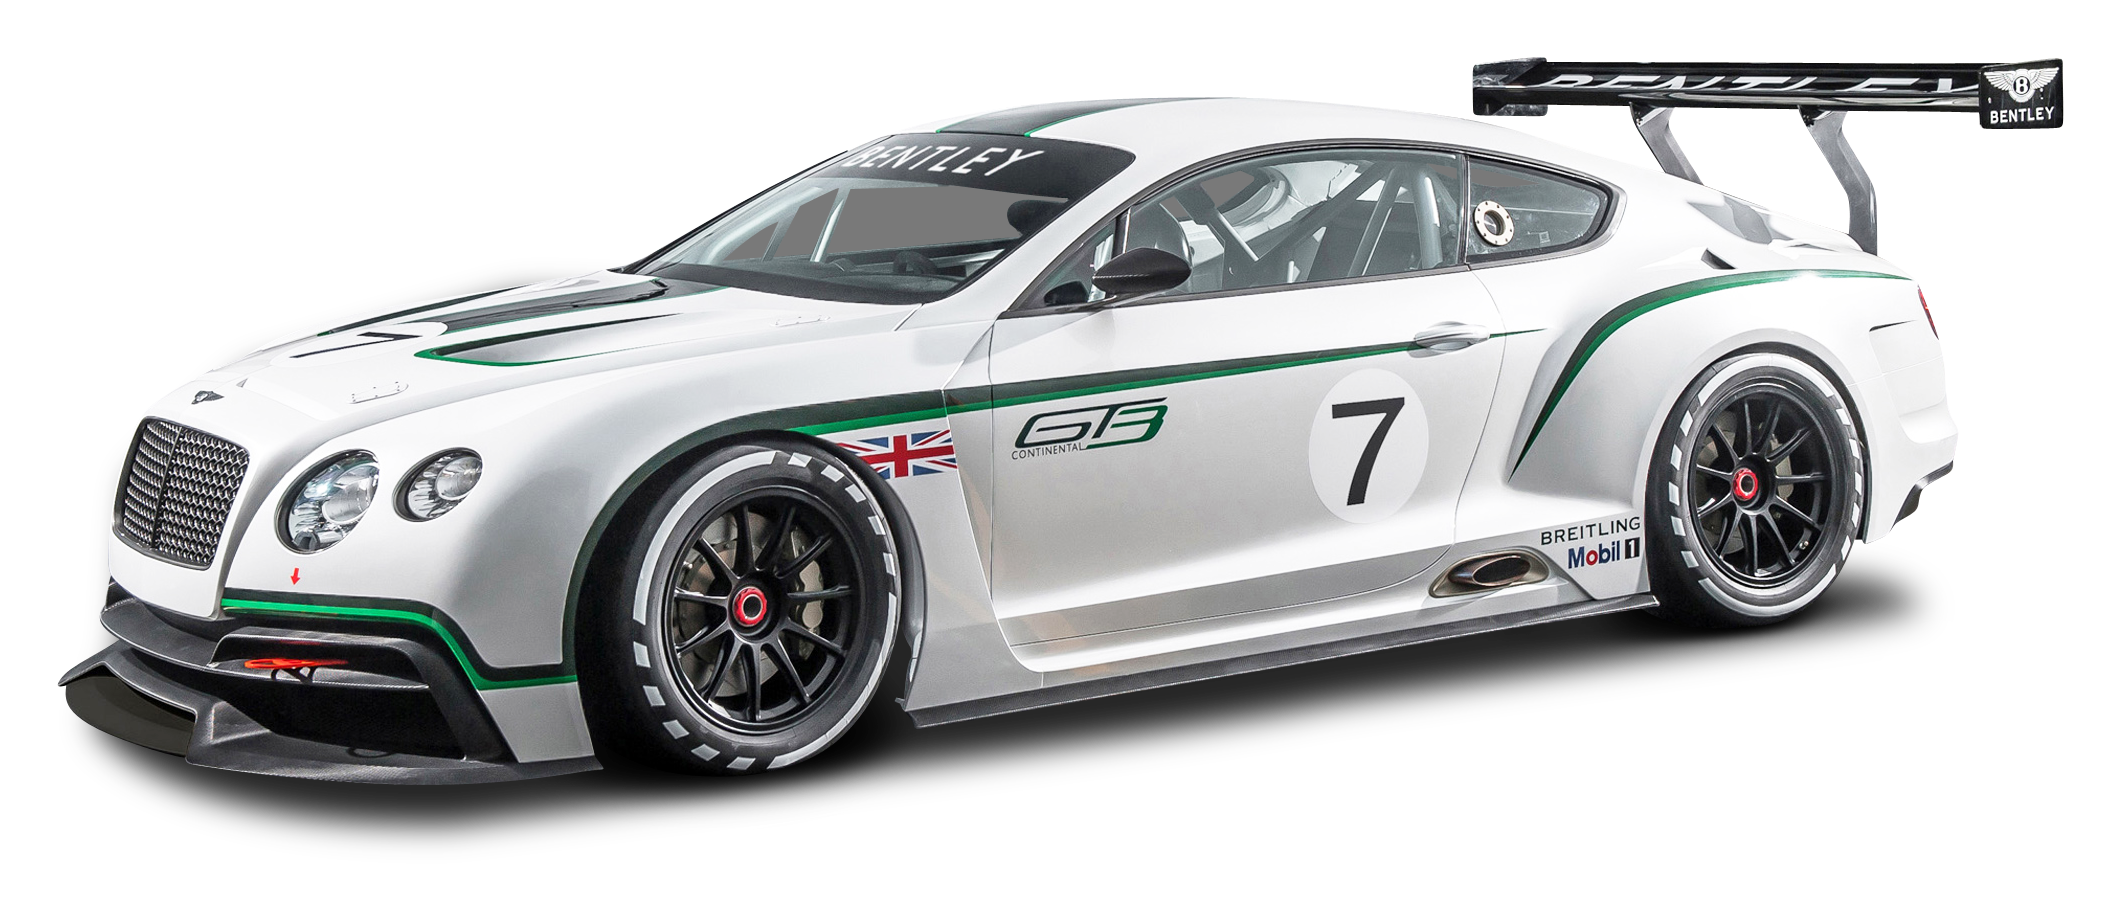 Bentley Continental GT3 R Race Car